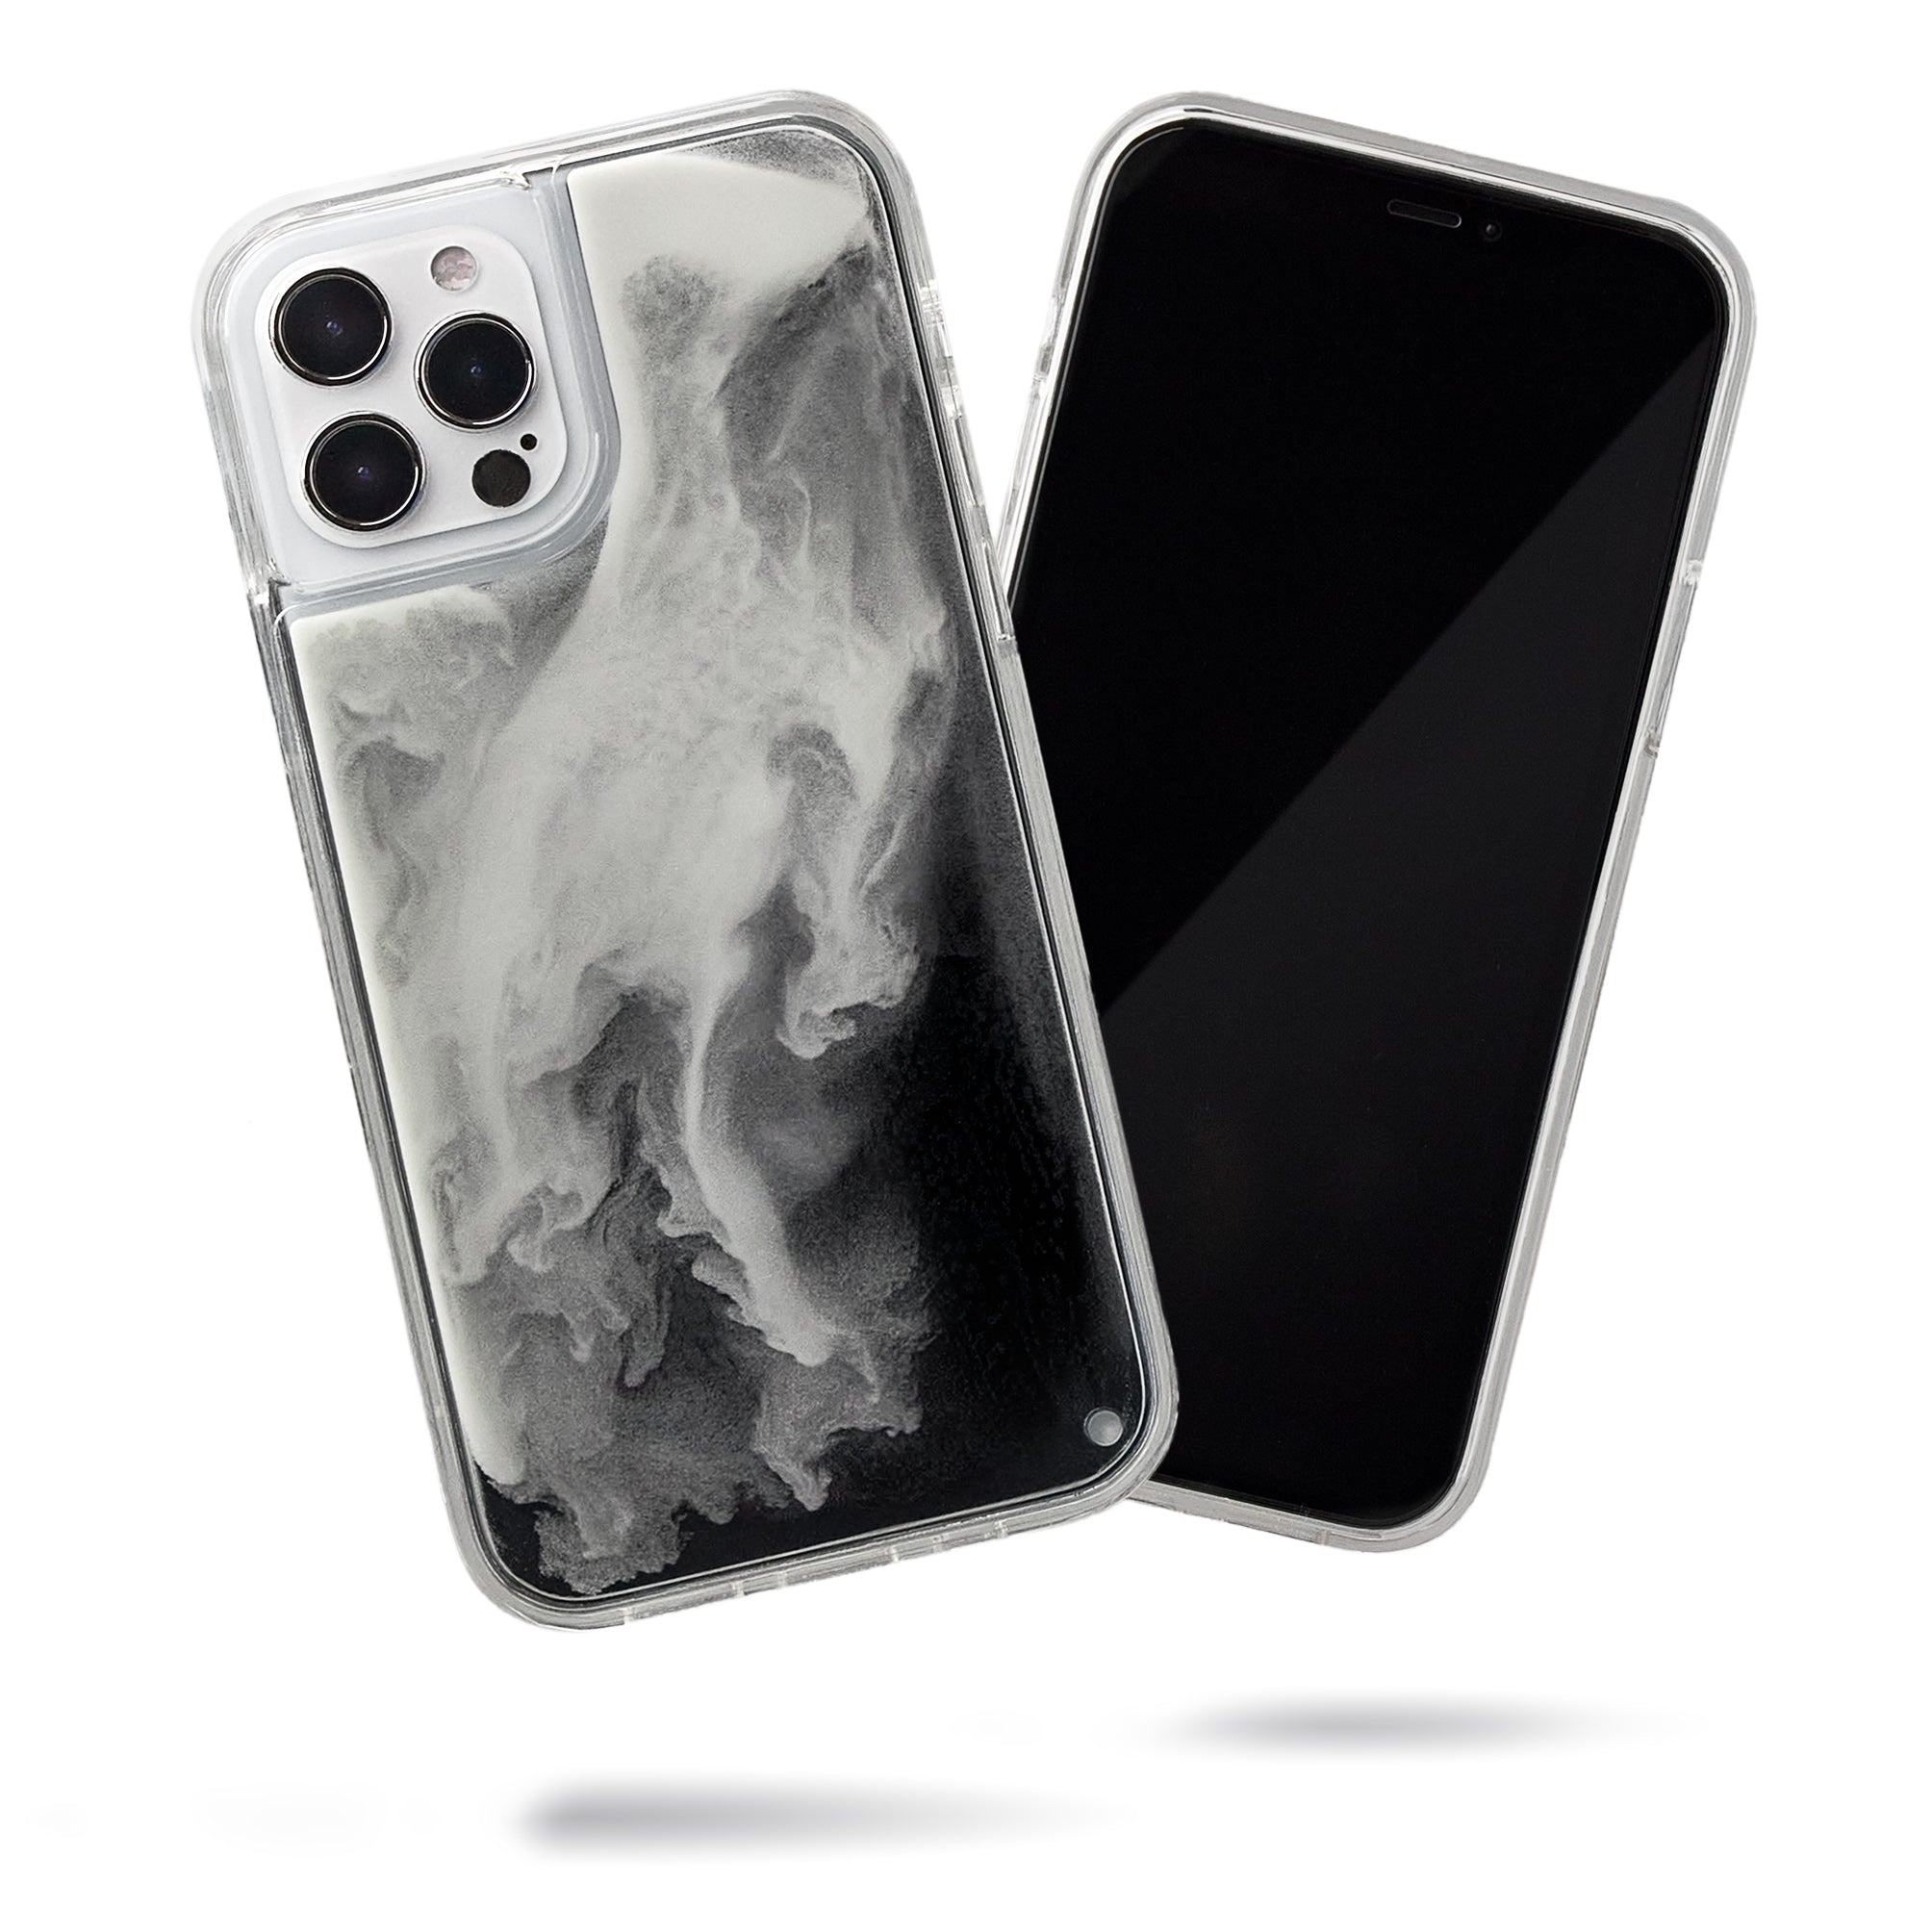 Neon Sand iPhone 12 Pro Max - Hi Contrast Black n White